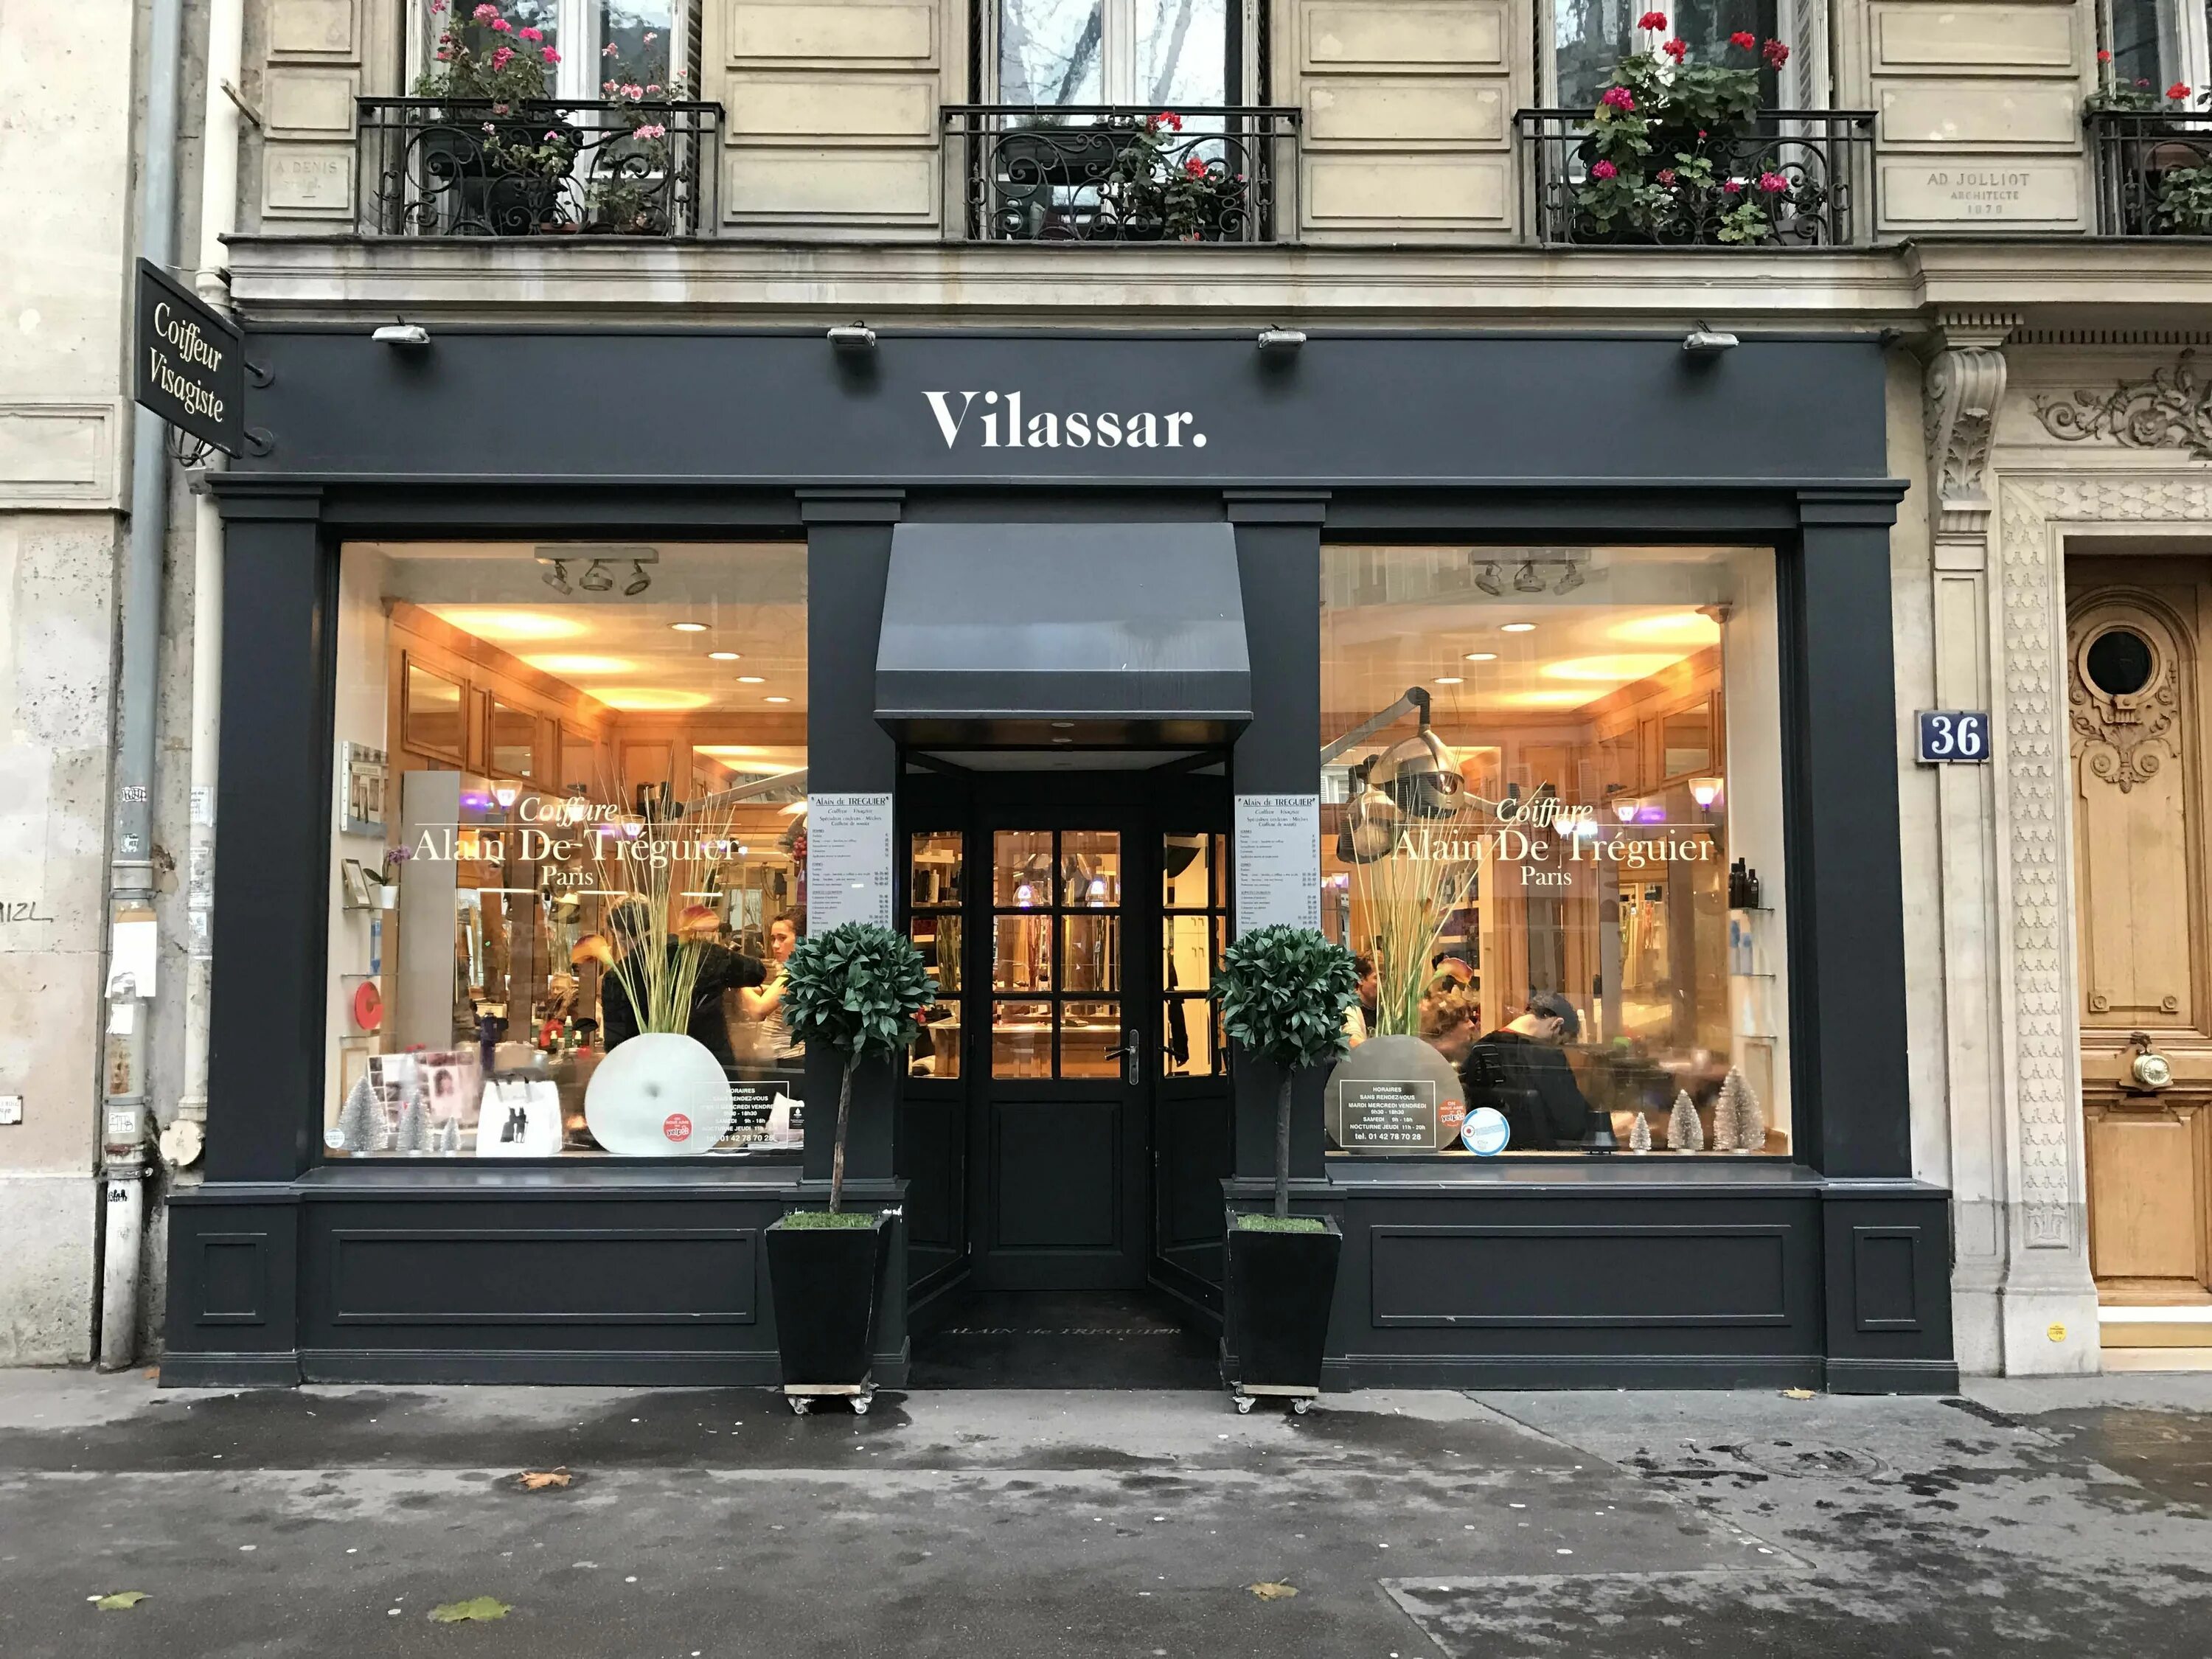 Парижские витрины. Фасад магазина. Витрины кафе в Париже. Фасад магазина Париж. Street shop store